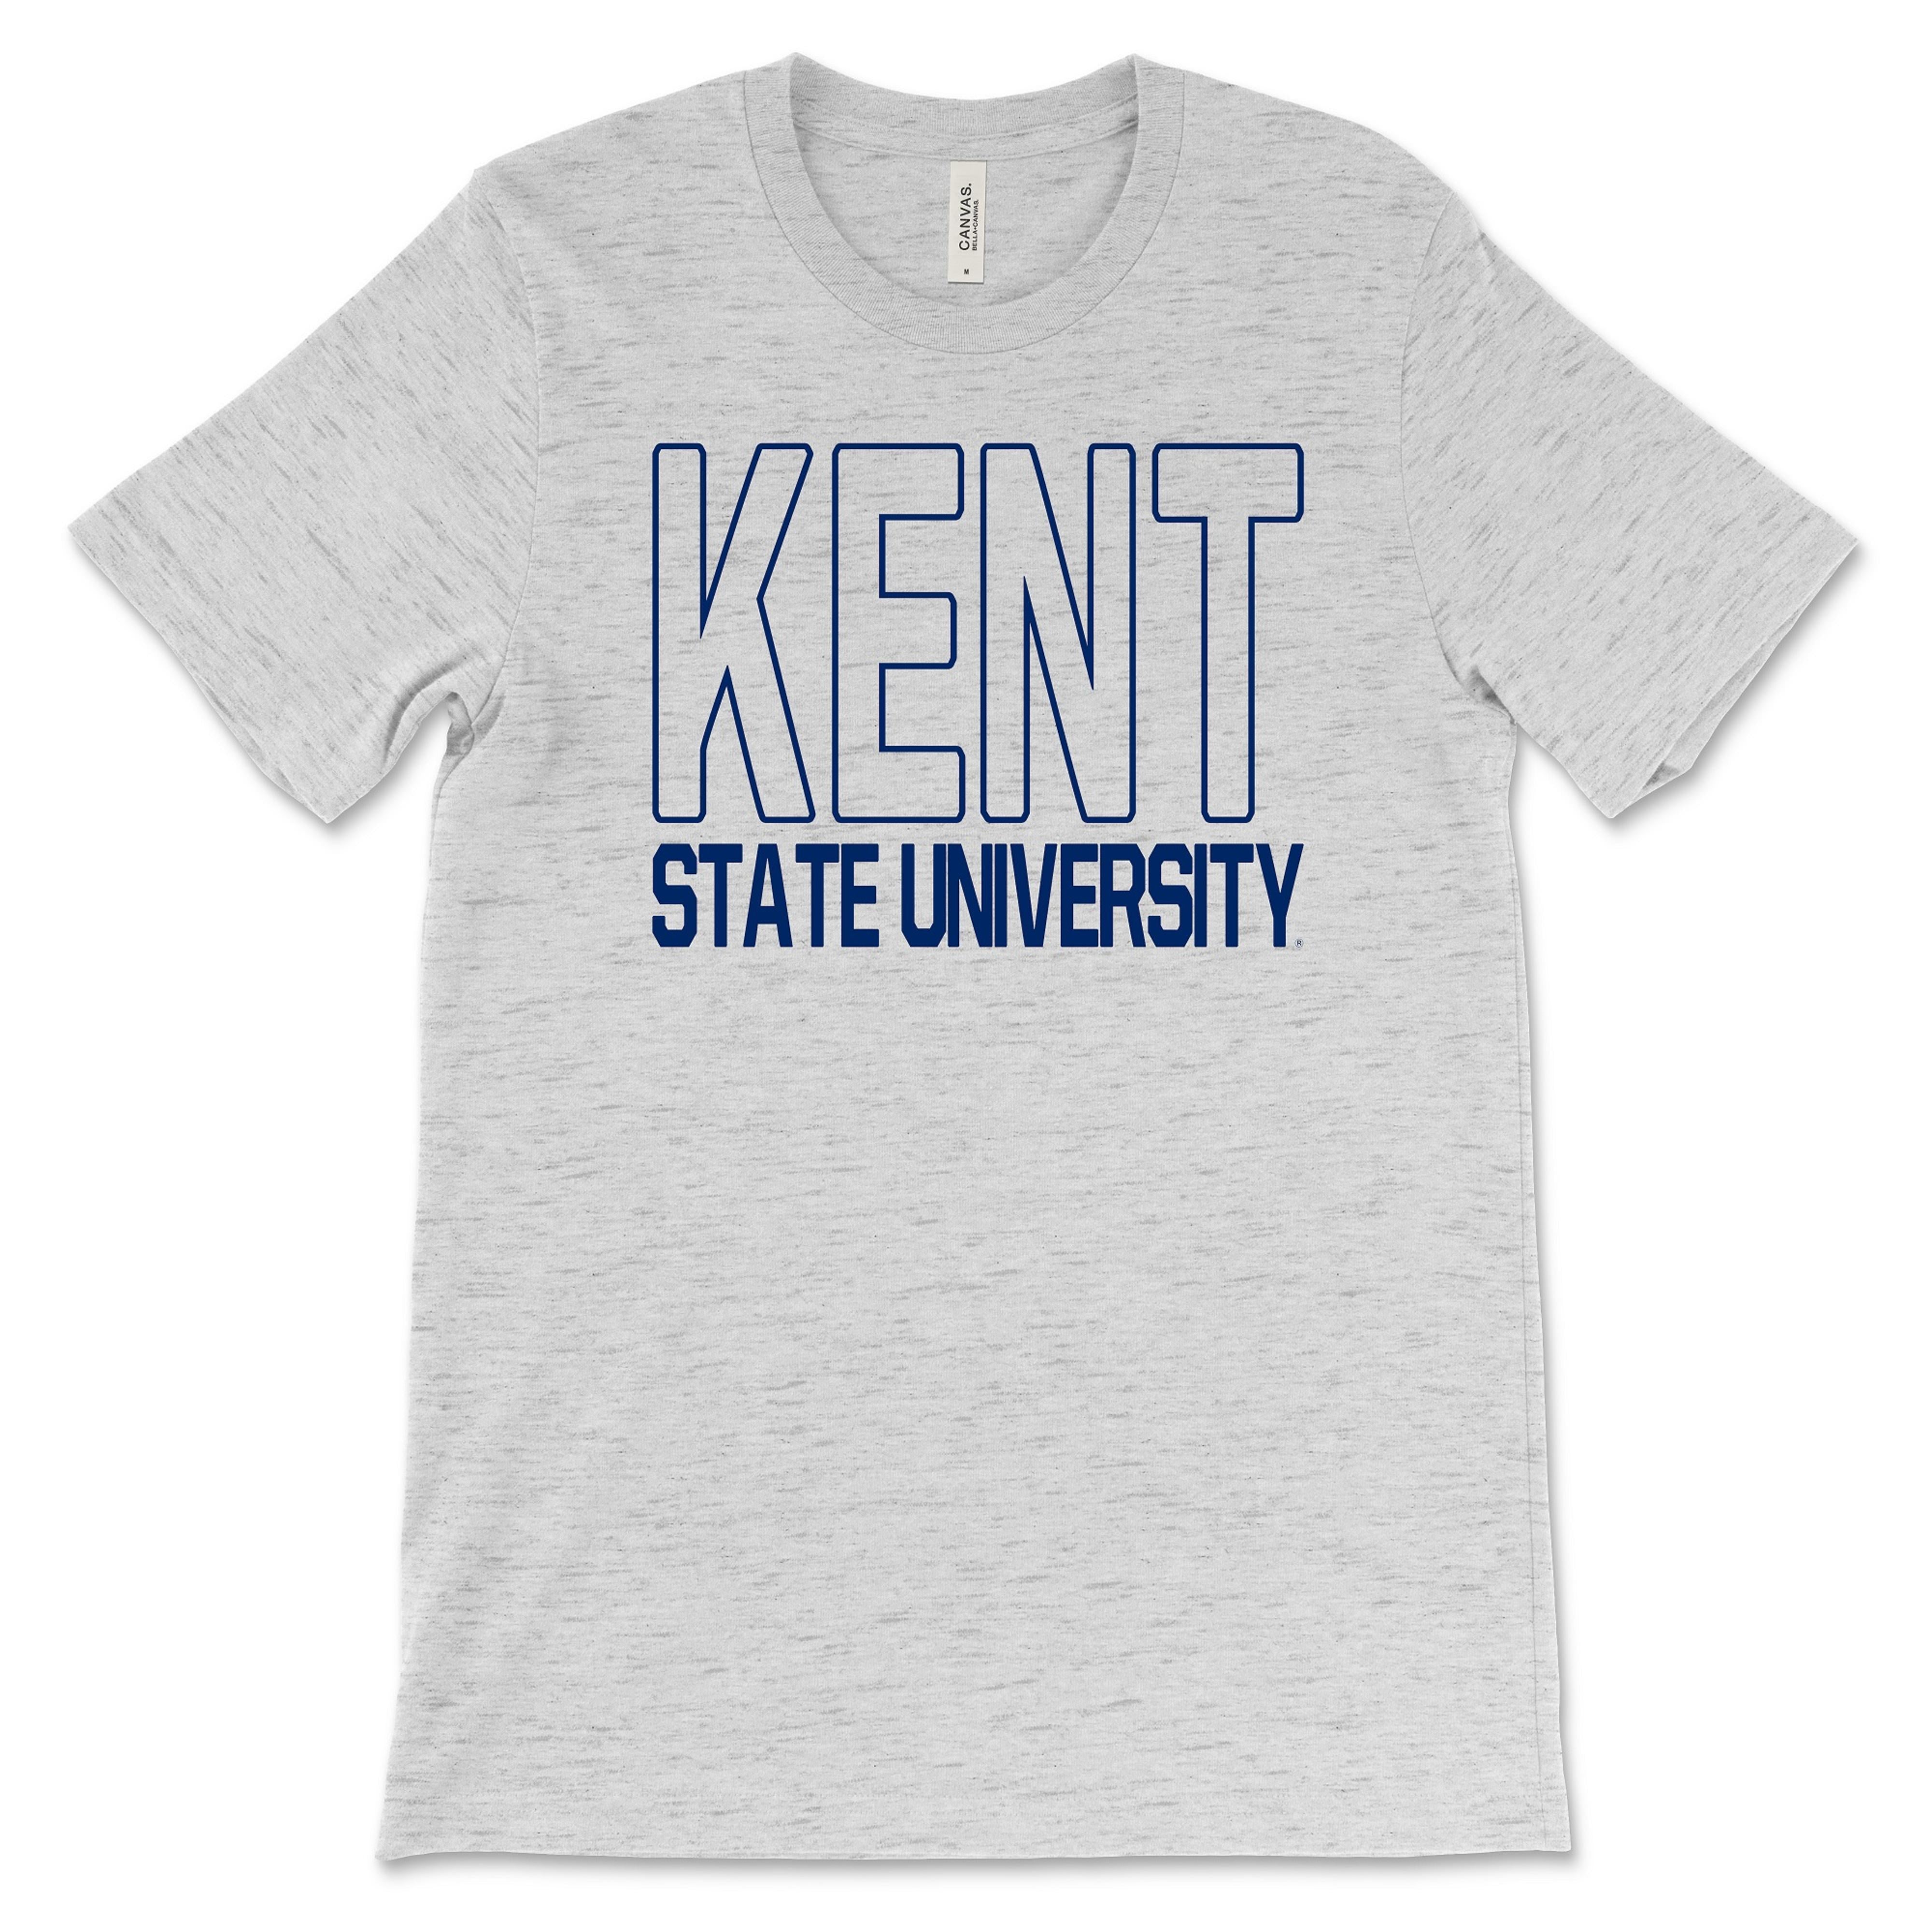 Big Kent Over State University